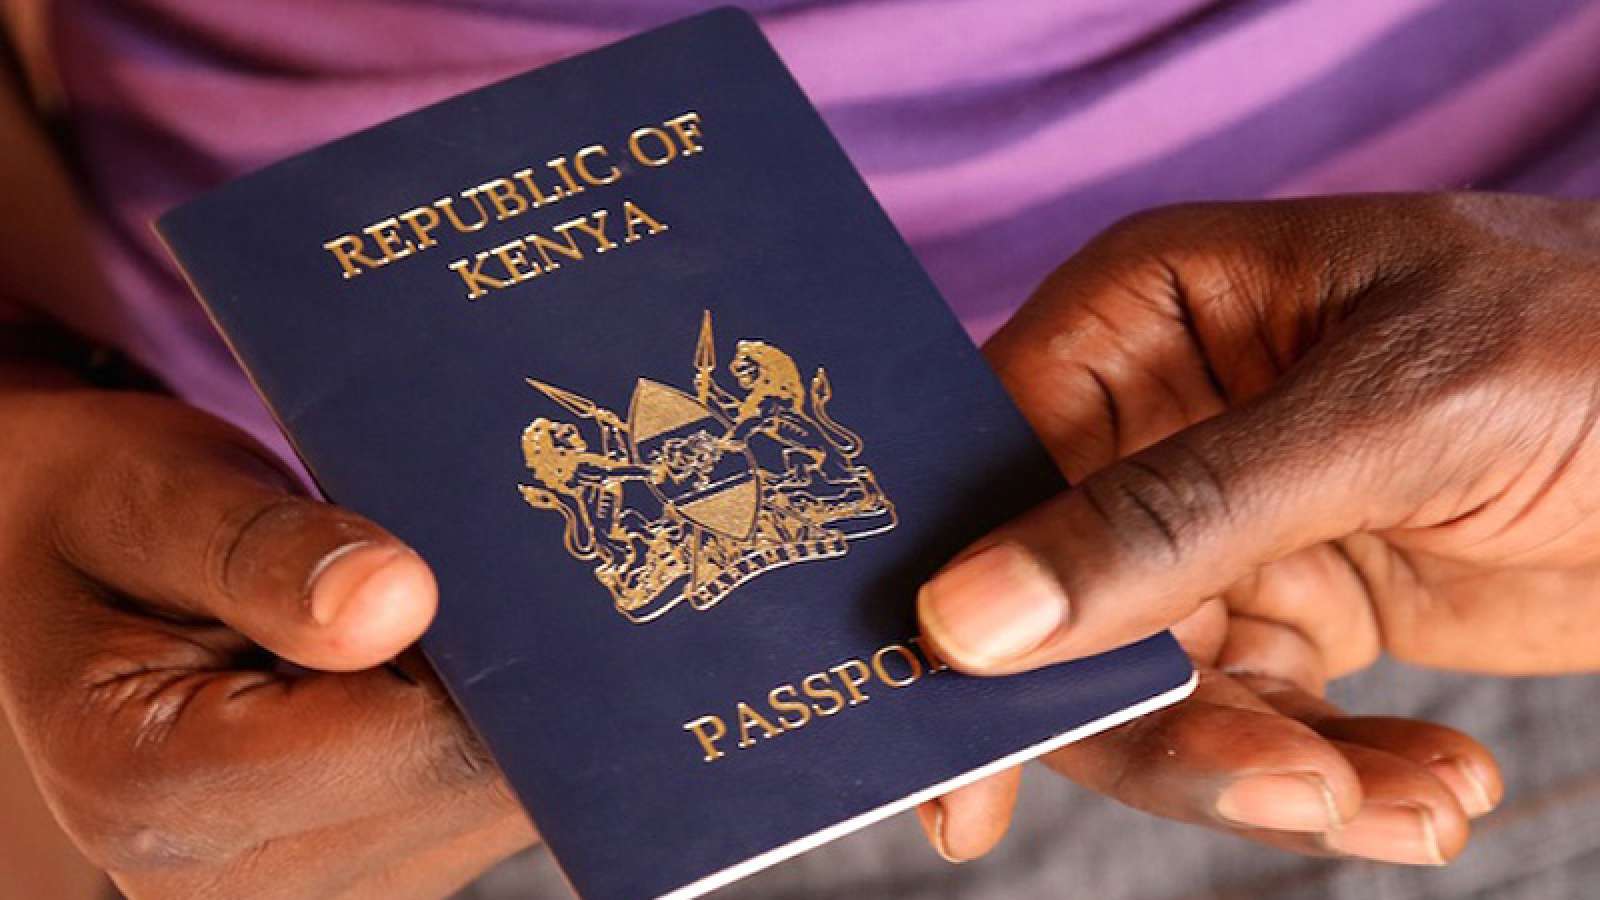 Chart: Africa's Most Powerful Passports